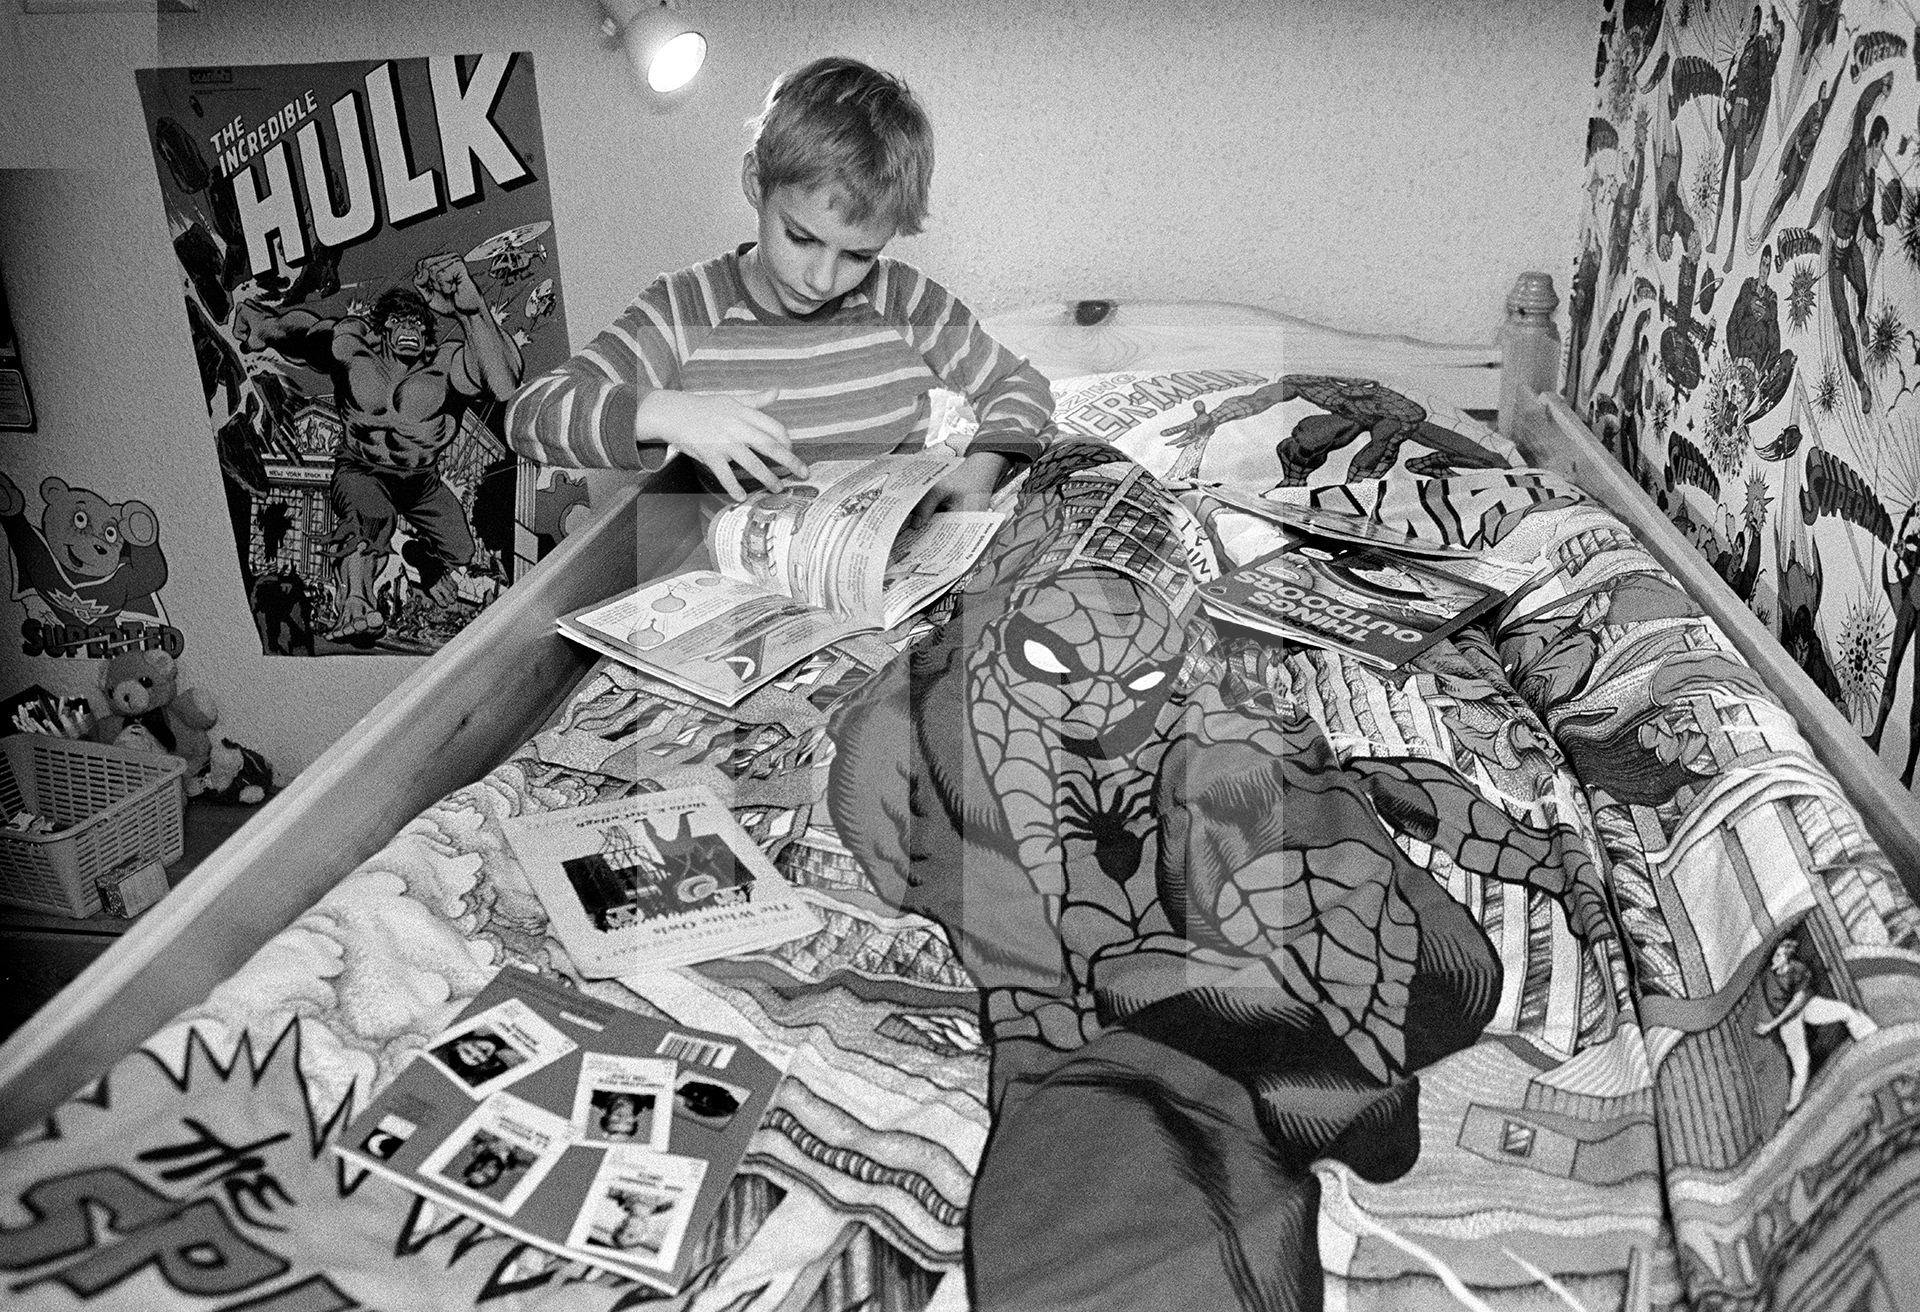 Spiderman bedroom, Beckenham, Kent. February 1985 by Daniel Meadows